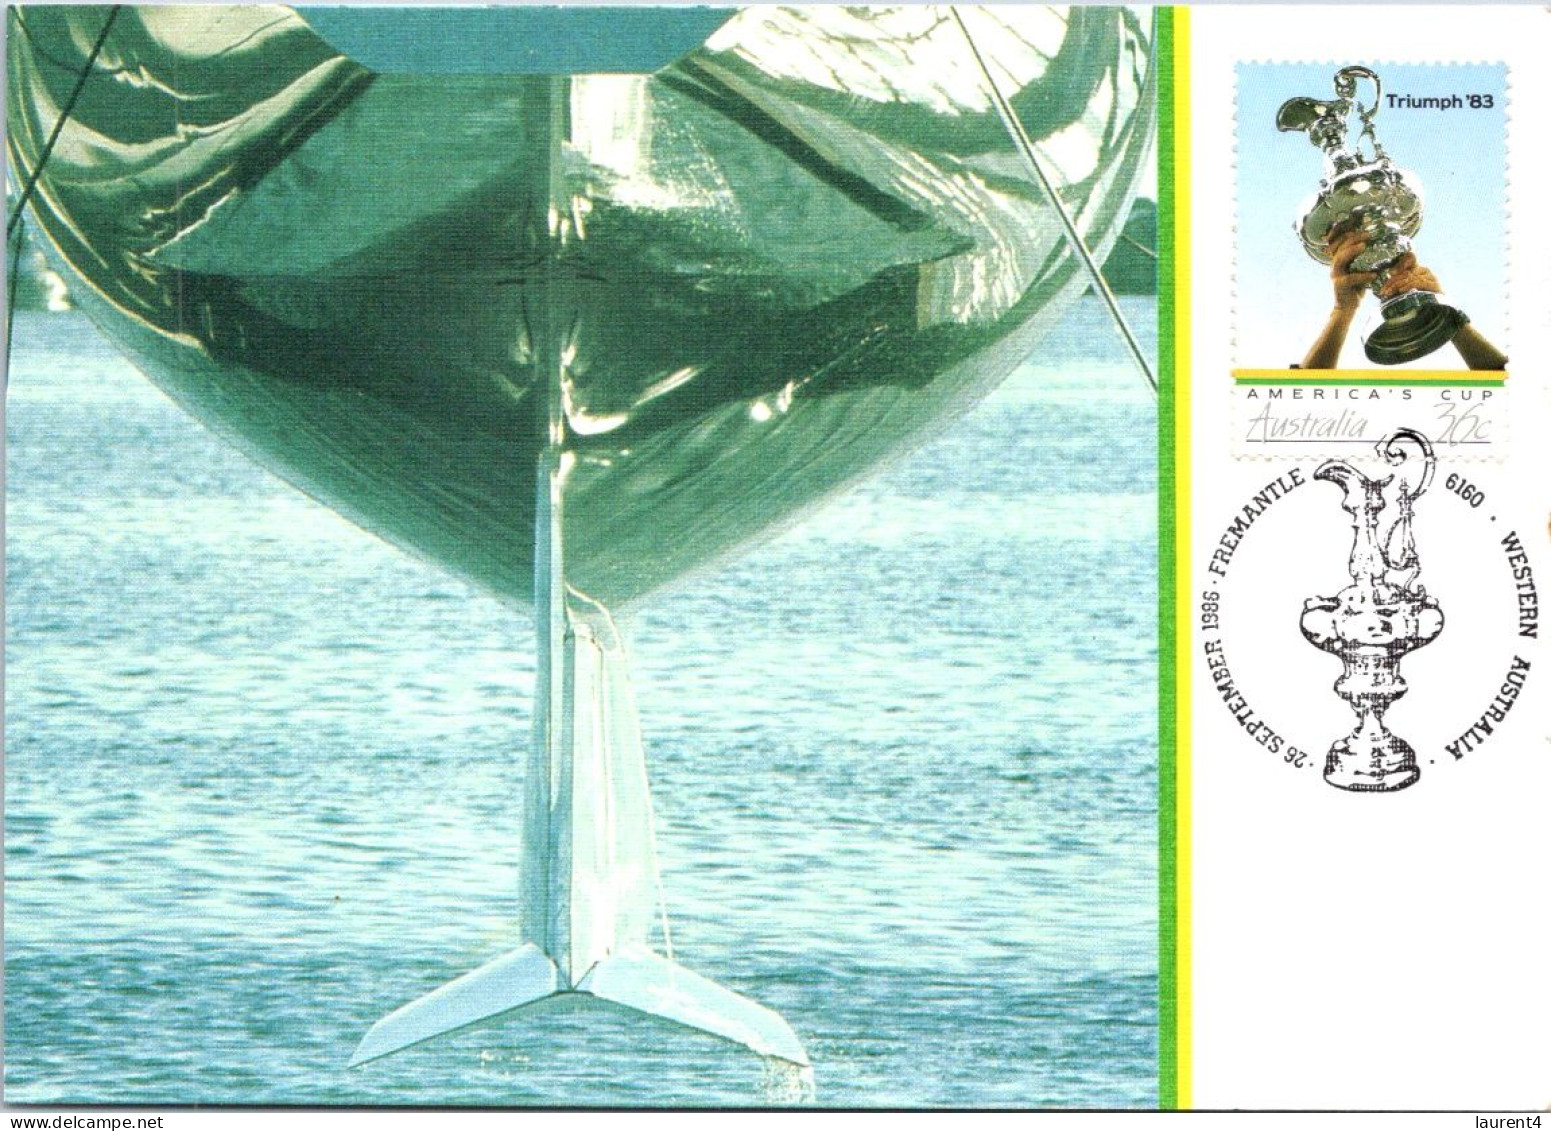 7-5-2024 (4 Z 30) Australia - America Cuo Triomph 1983 (sailing) 7 Postcards - Voile